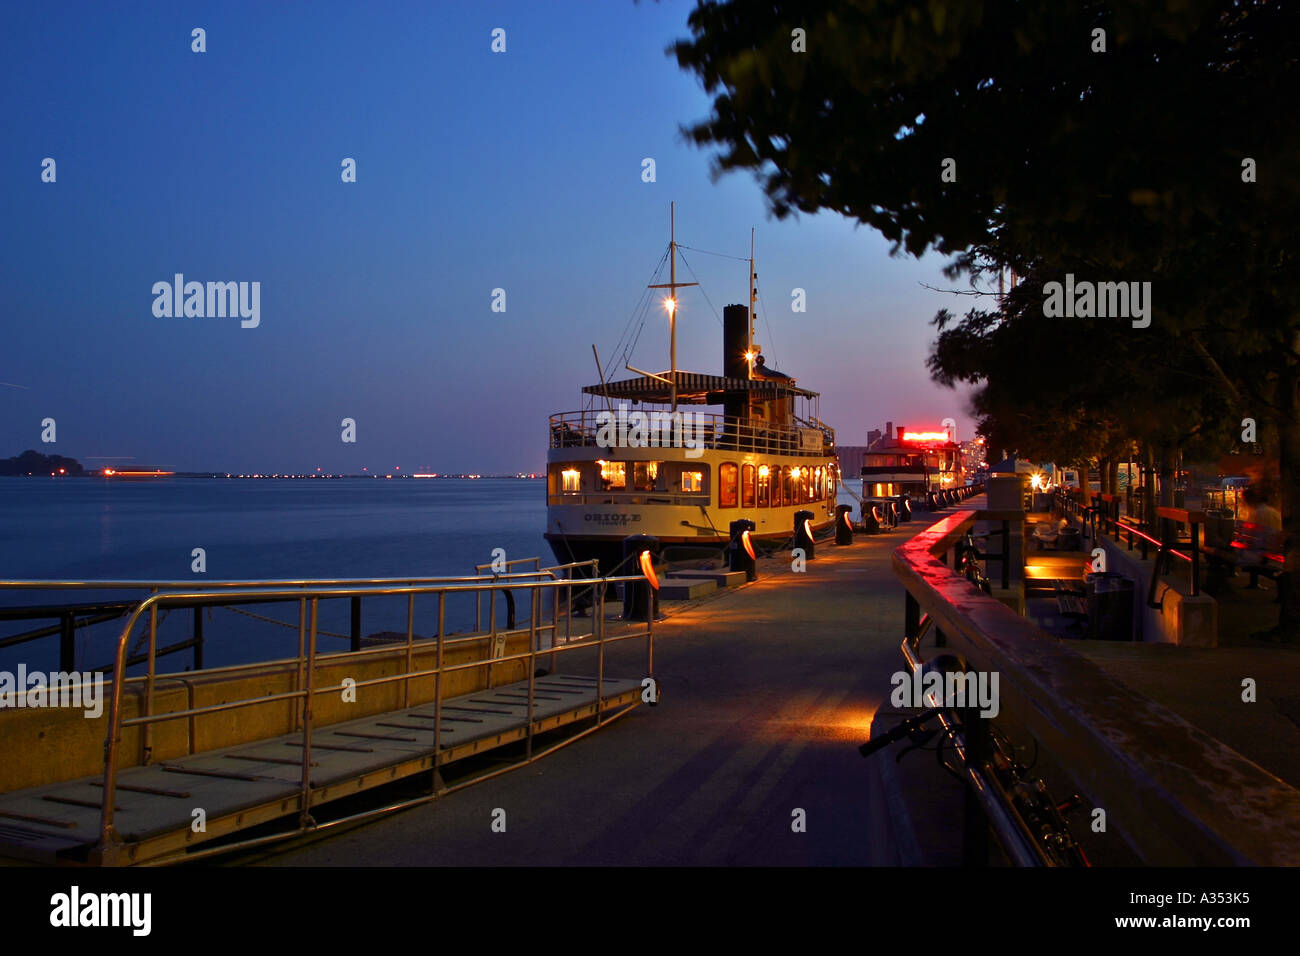 Toronto harbor at night. Boat-restaurant docked near the colorfully lit sidewalk. Stock Photo